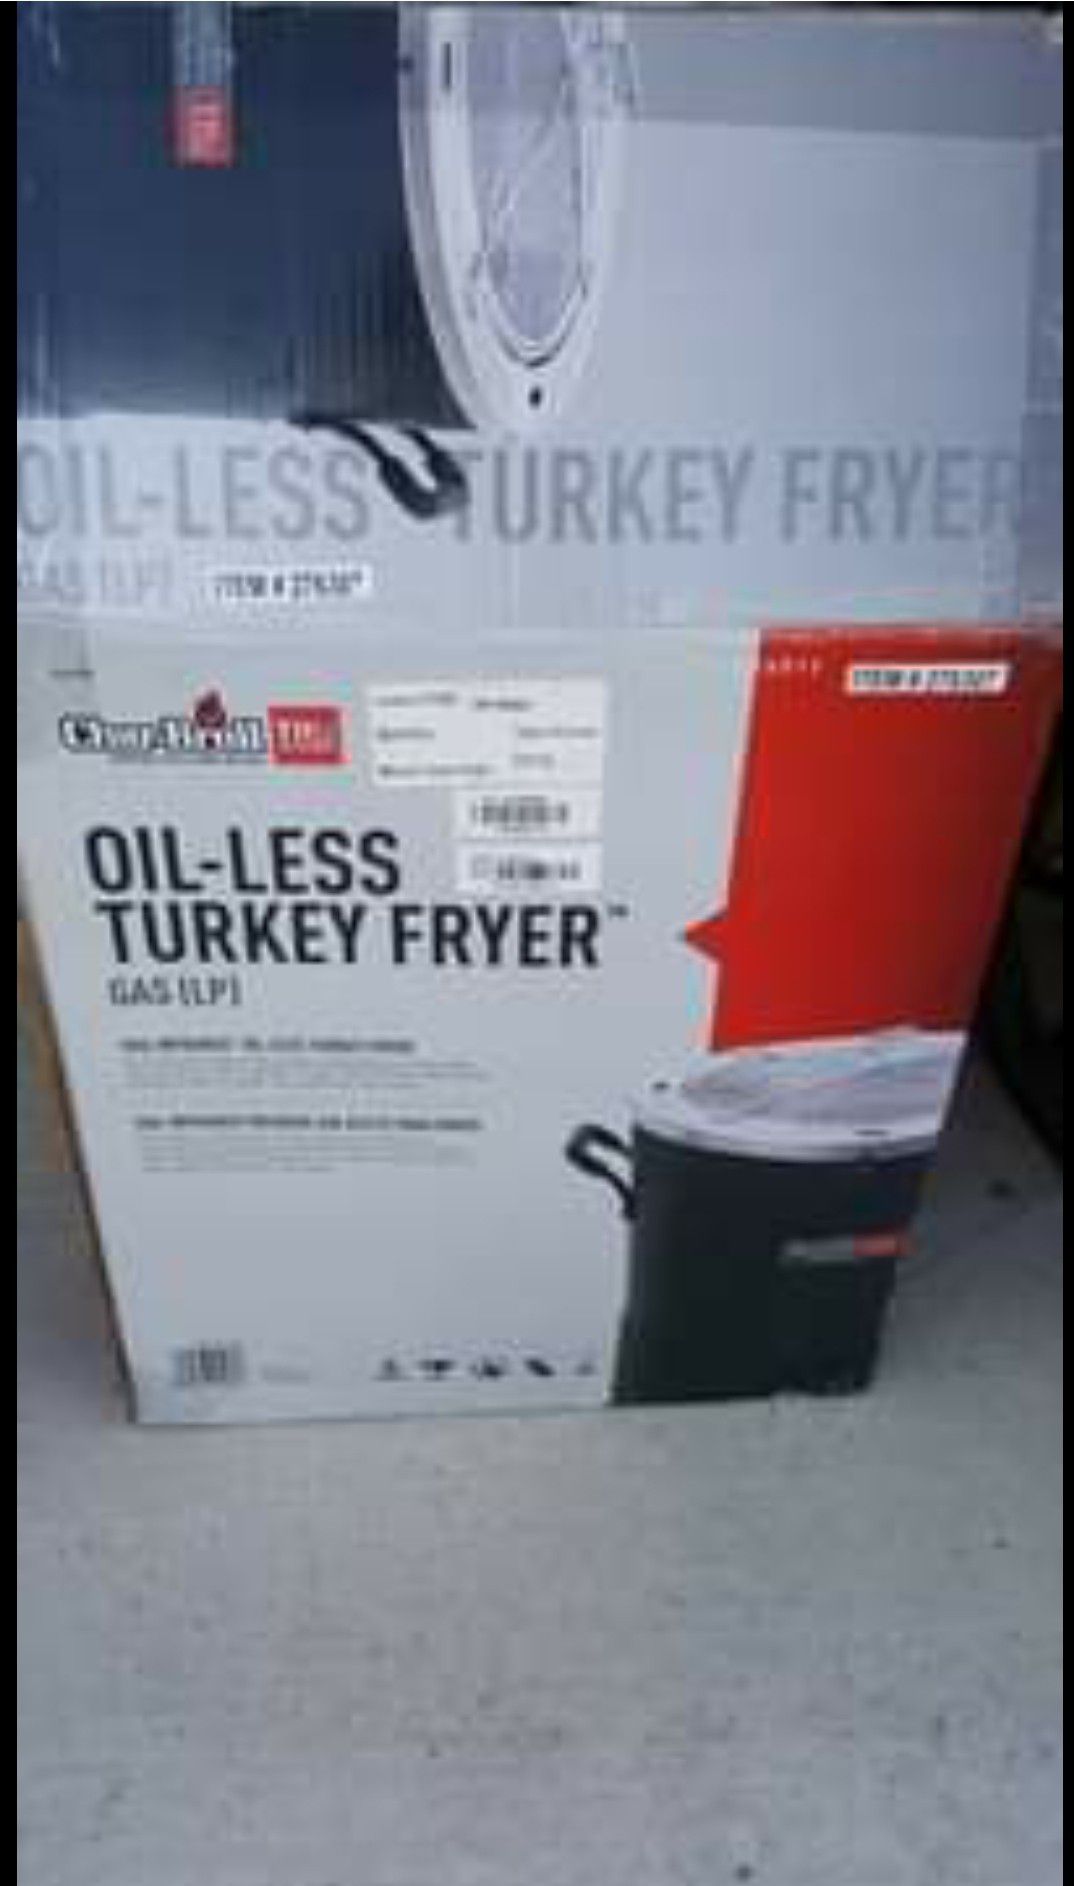 CharBroil Oil-less Turkey Fryer